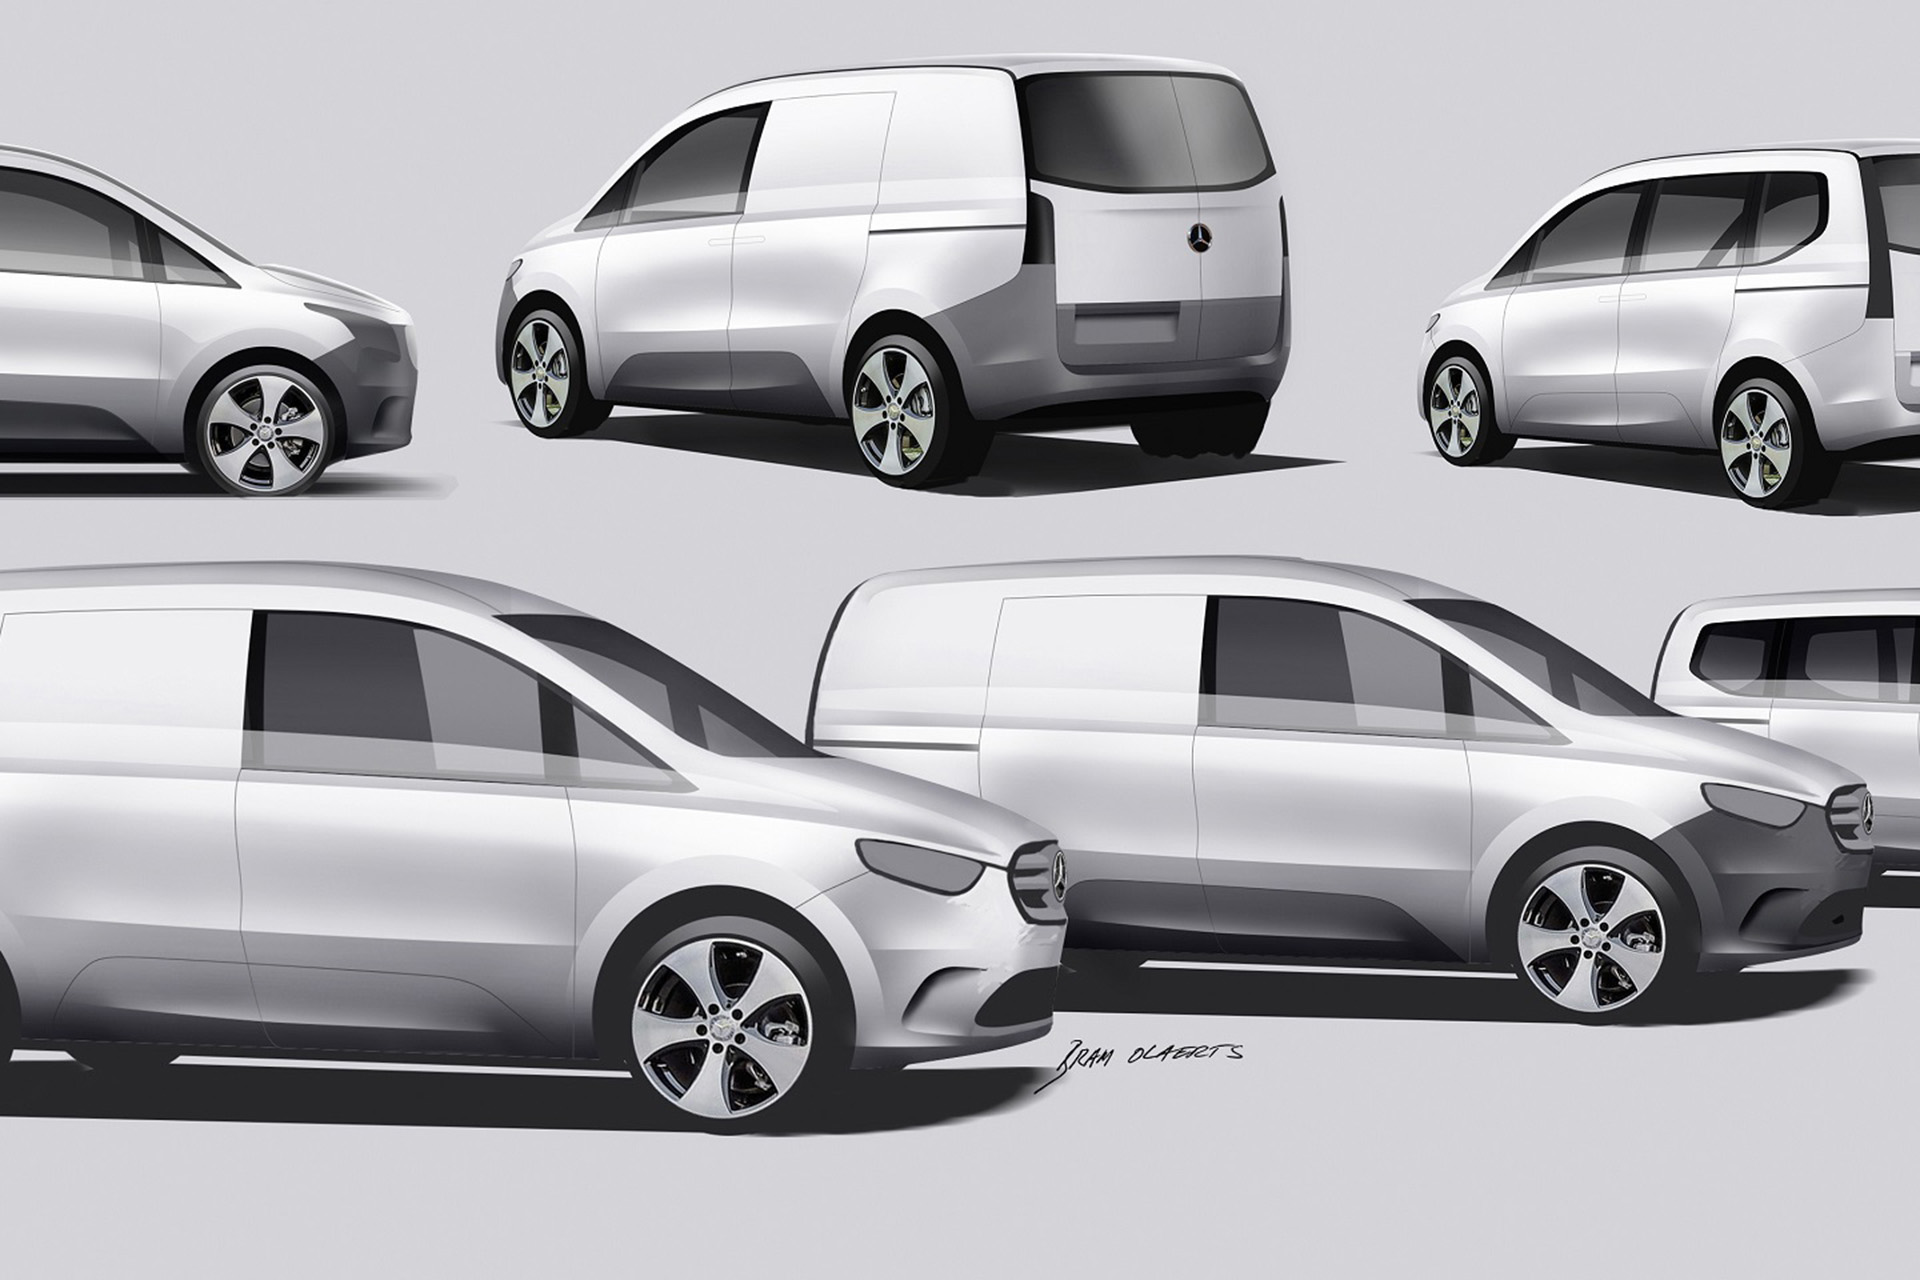 2022 Mercedes-Benz Citan Design Sketch Wallpapers #106 of 115